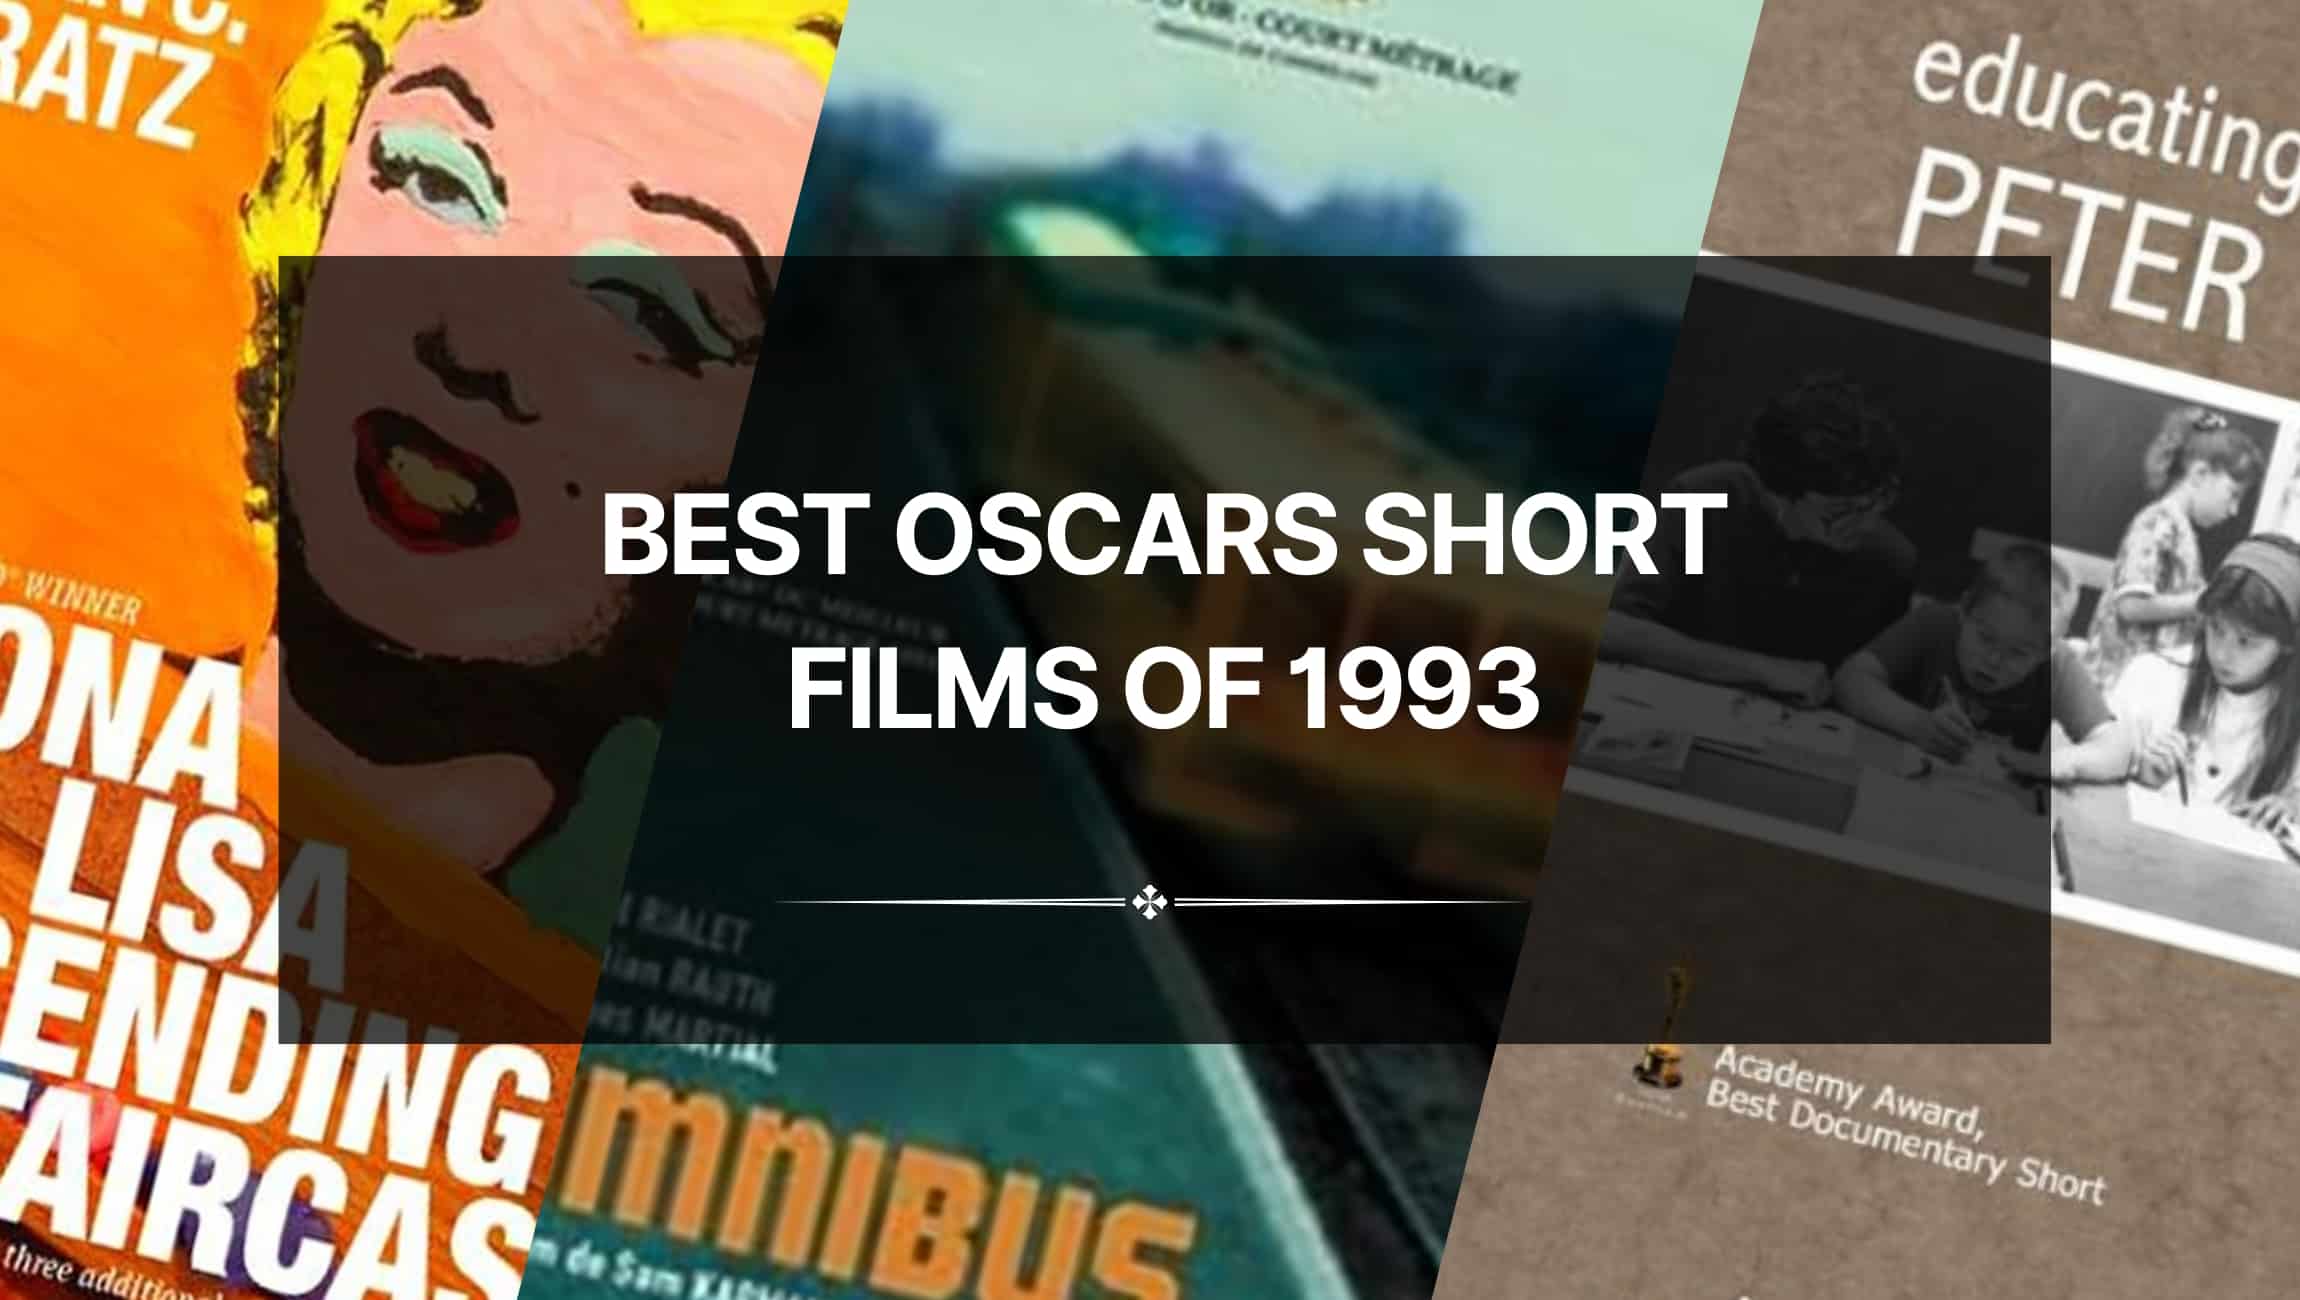 Best Oscars Short Films of 1993